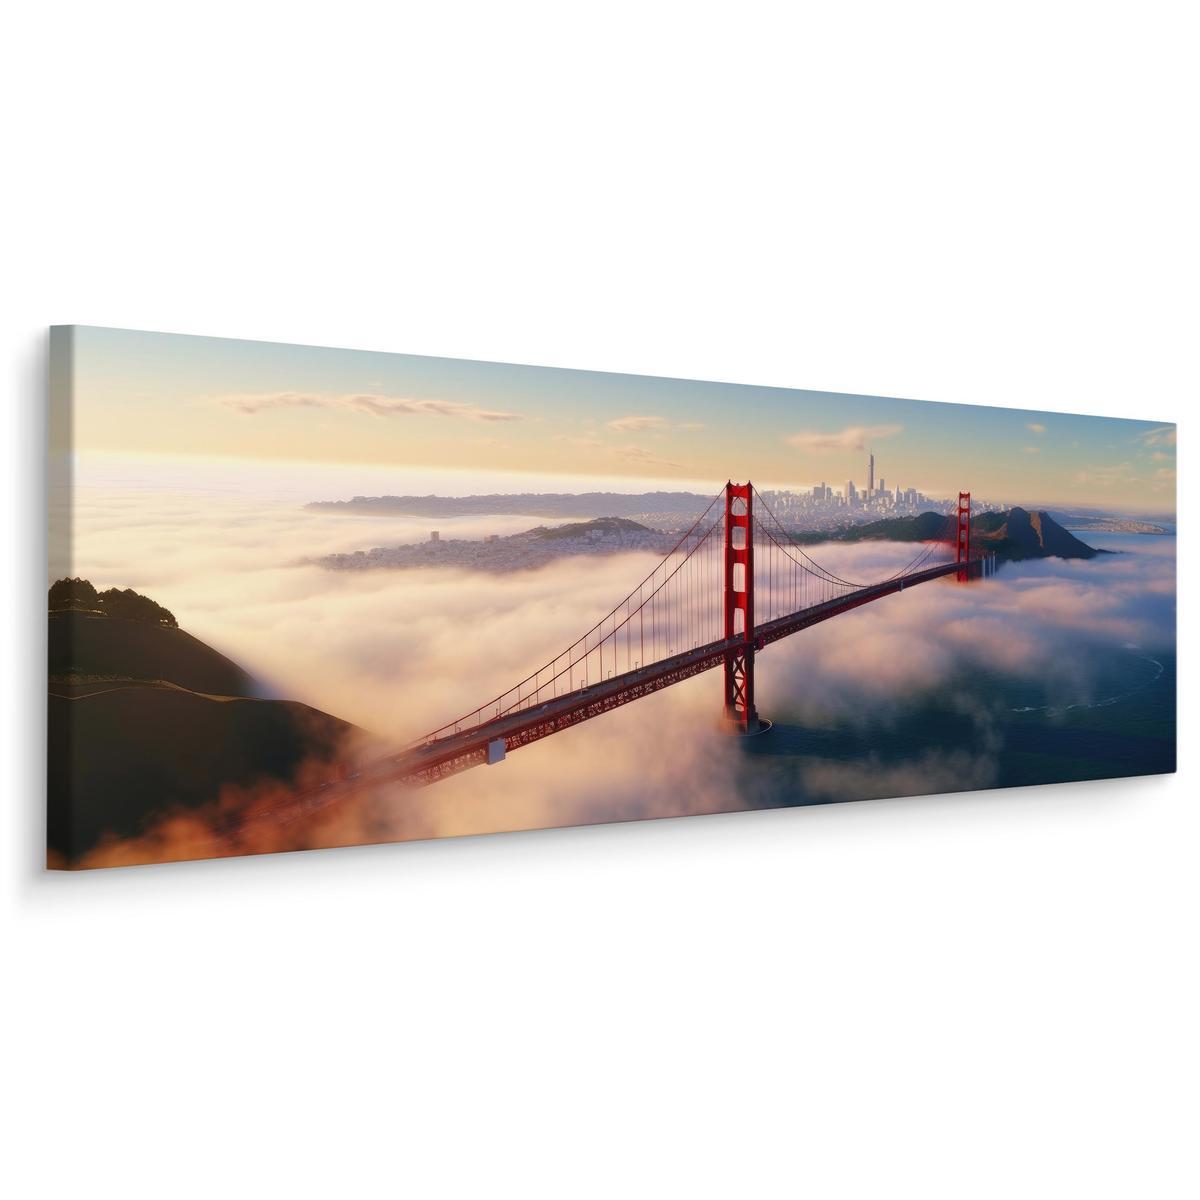 Obraz Do Salonu MOST Golden Gate We Mgle Pejzaż San Francisco 145x45cm 0 Full Screen